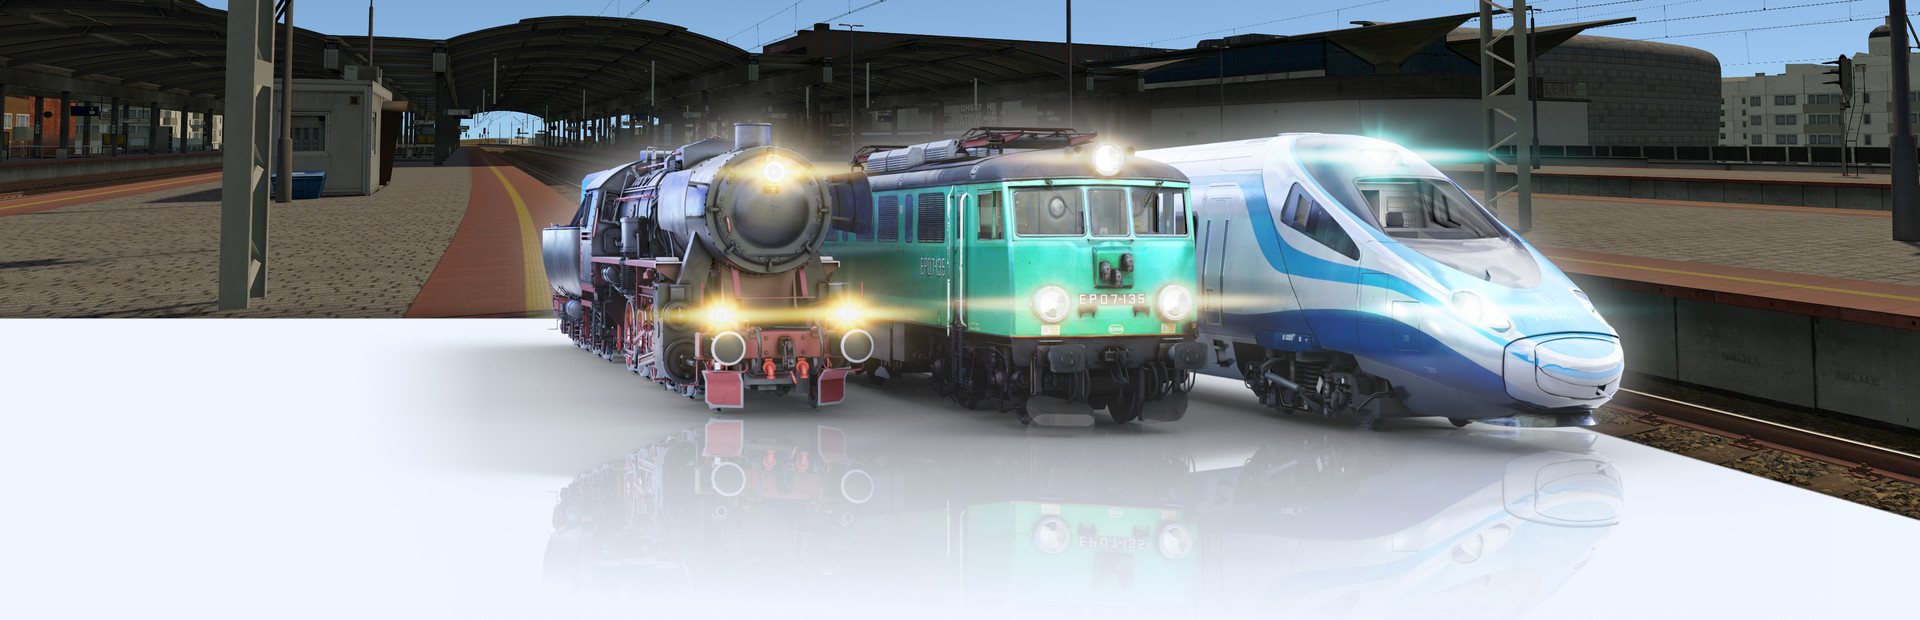 SimRail - The Railway Simulator cover image